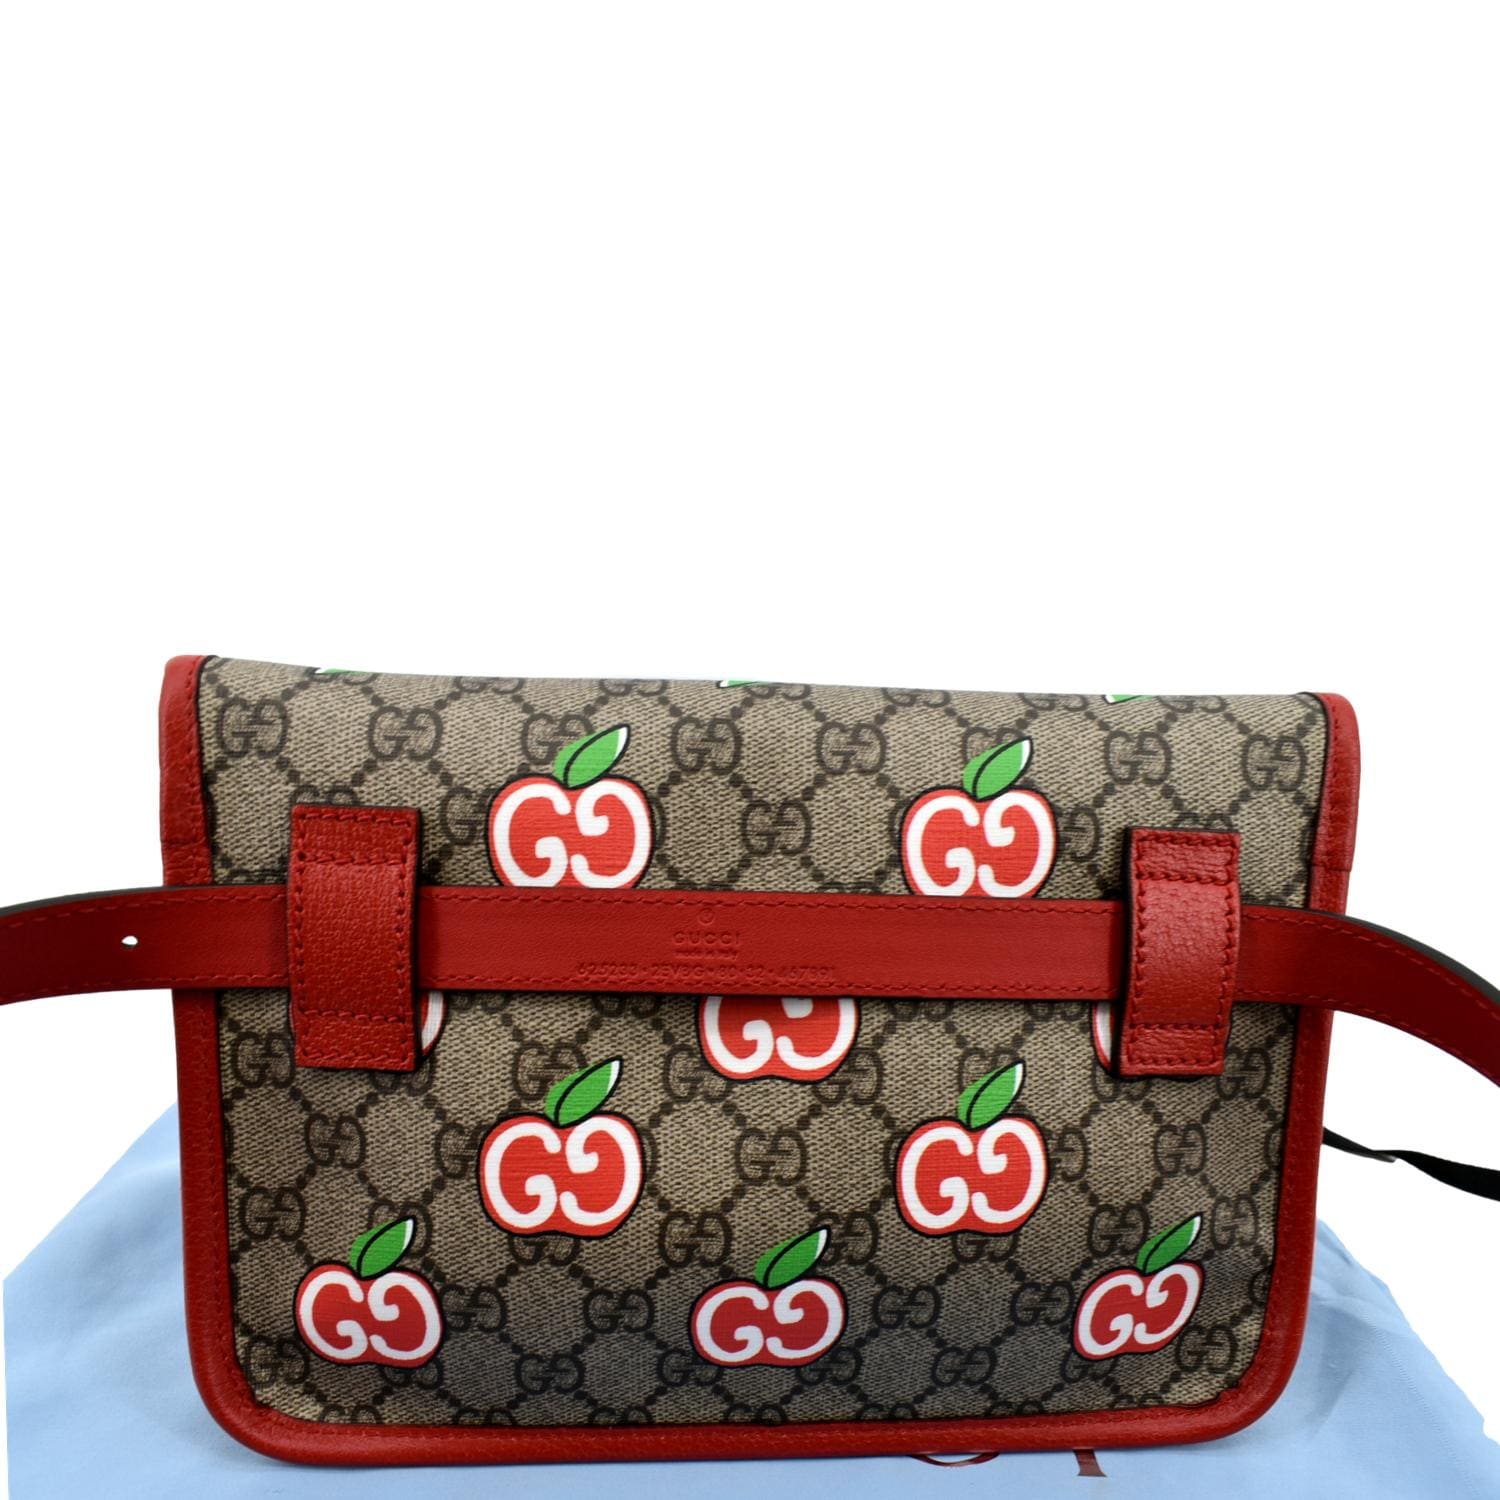 Ophidia GG Supreme Belt Bag in Multicoloured - Gucci